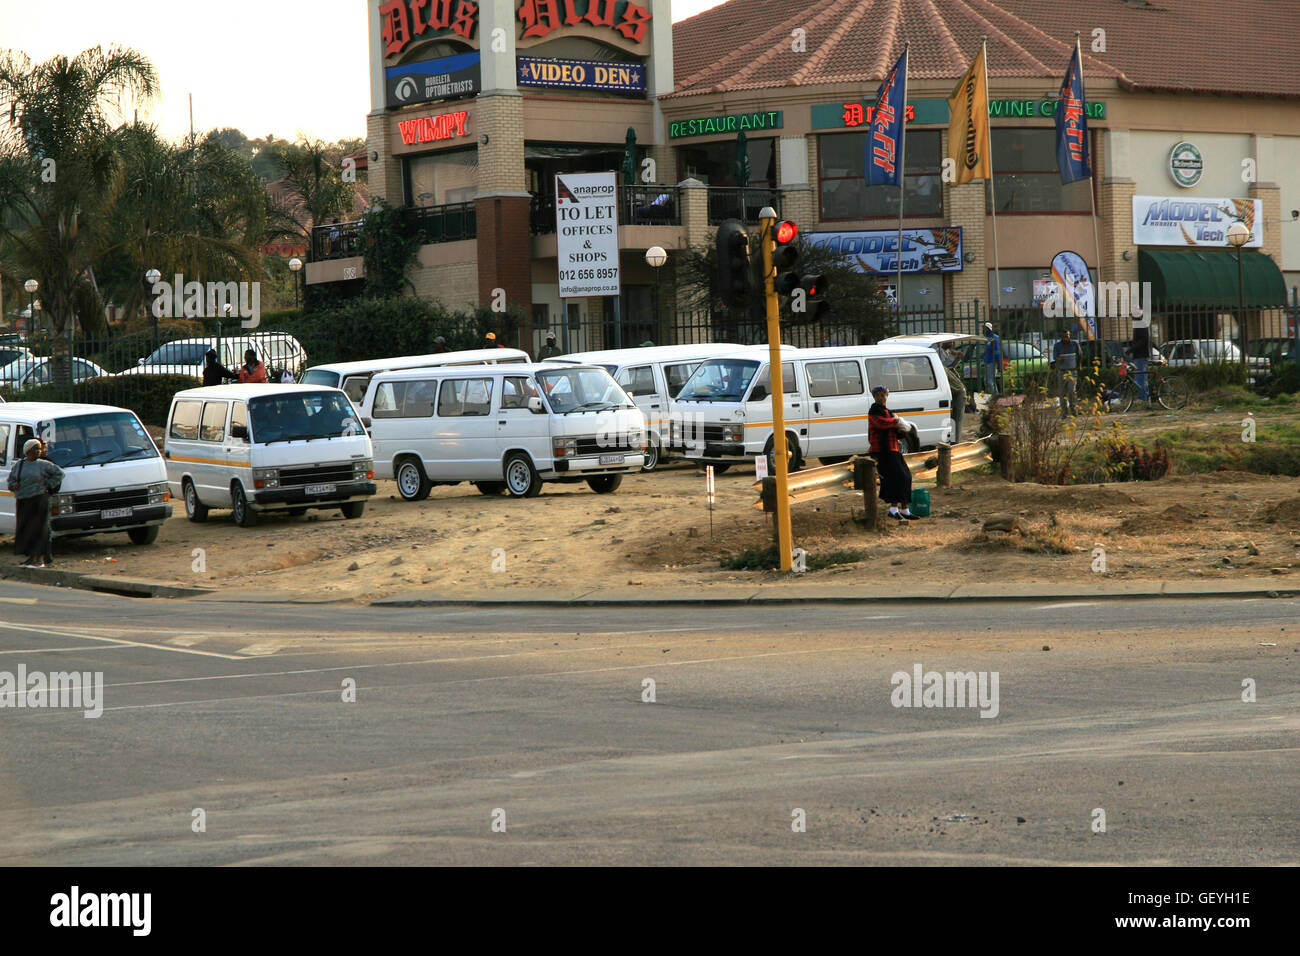 Taxi rank, Moreleta Square, Pretoria, South Africa Stock Photo